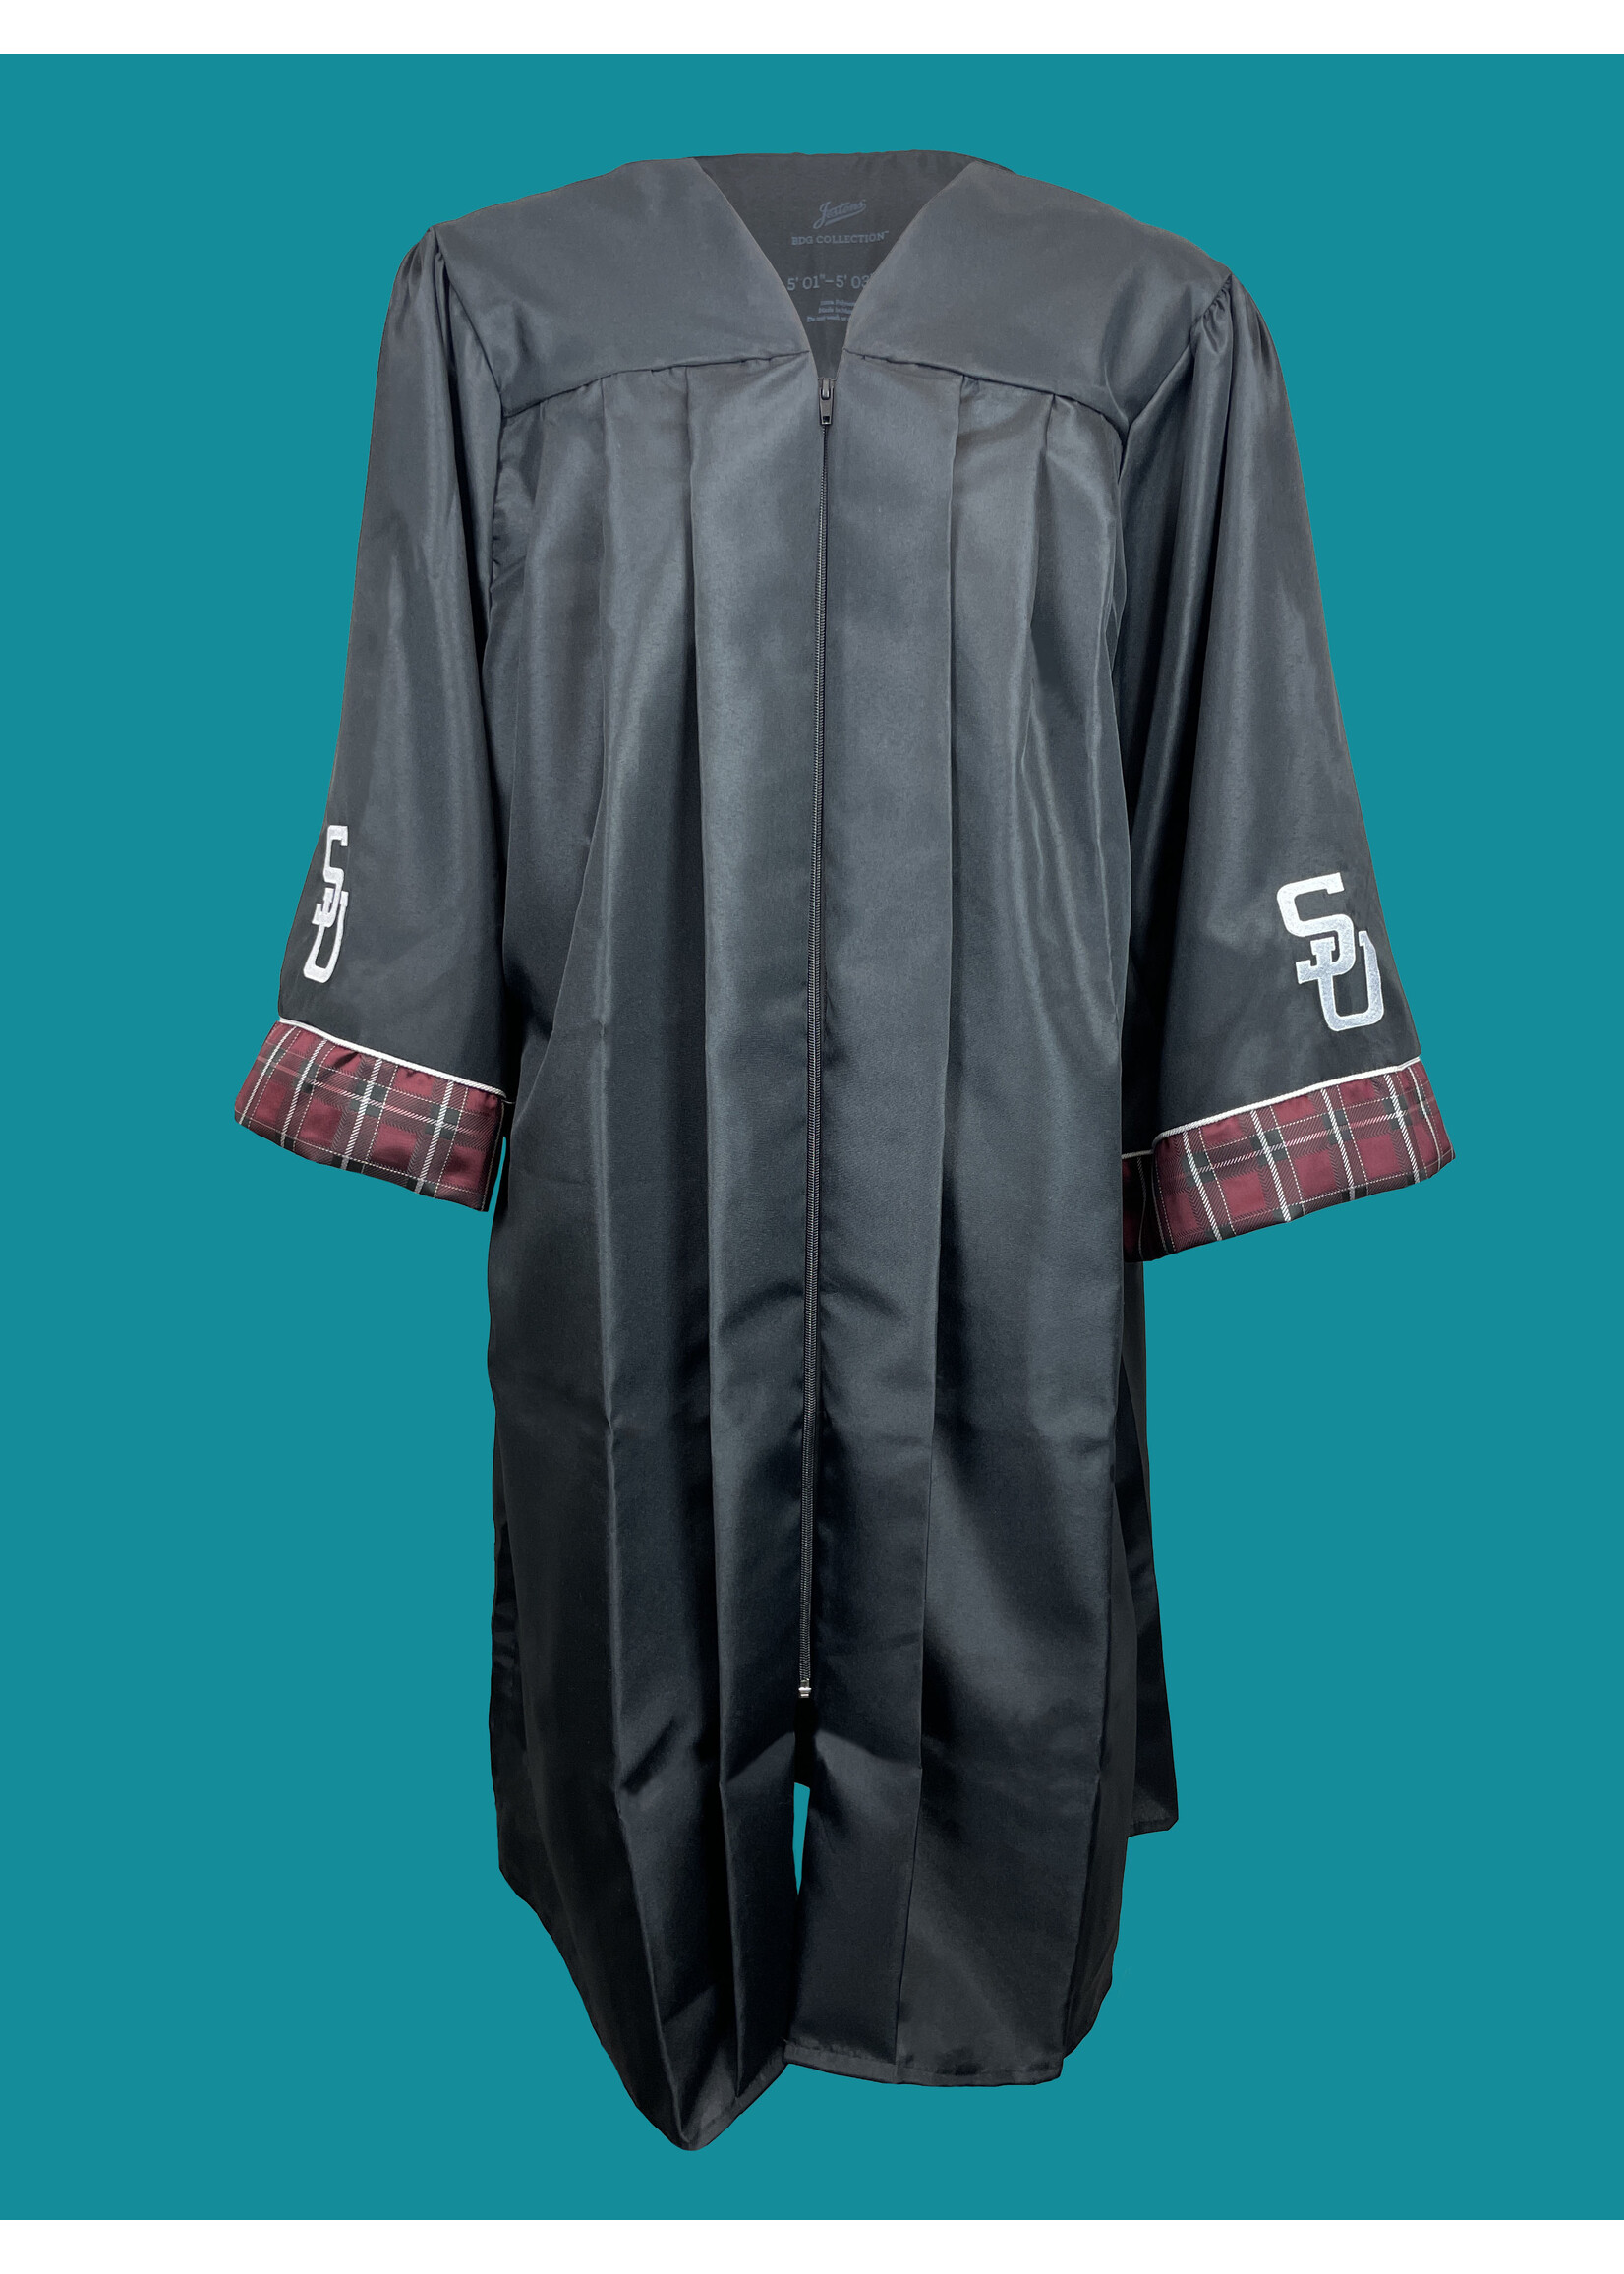 Jostens Bachelor's Graduation Robe